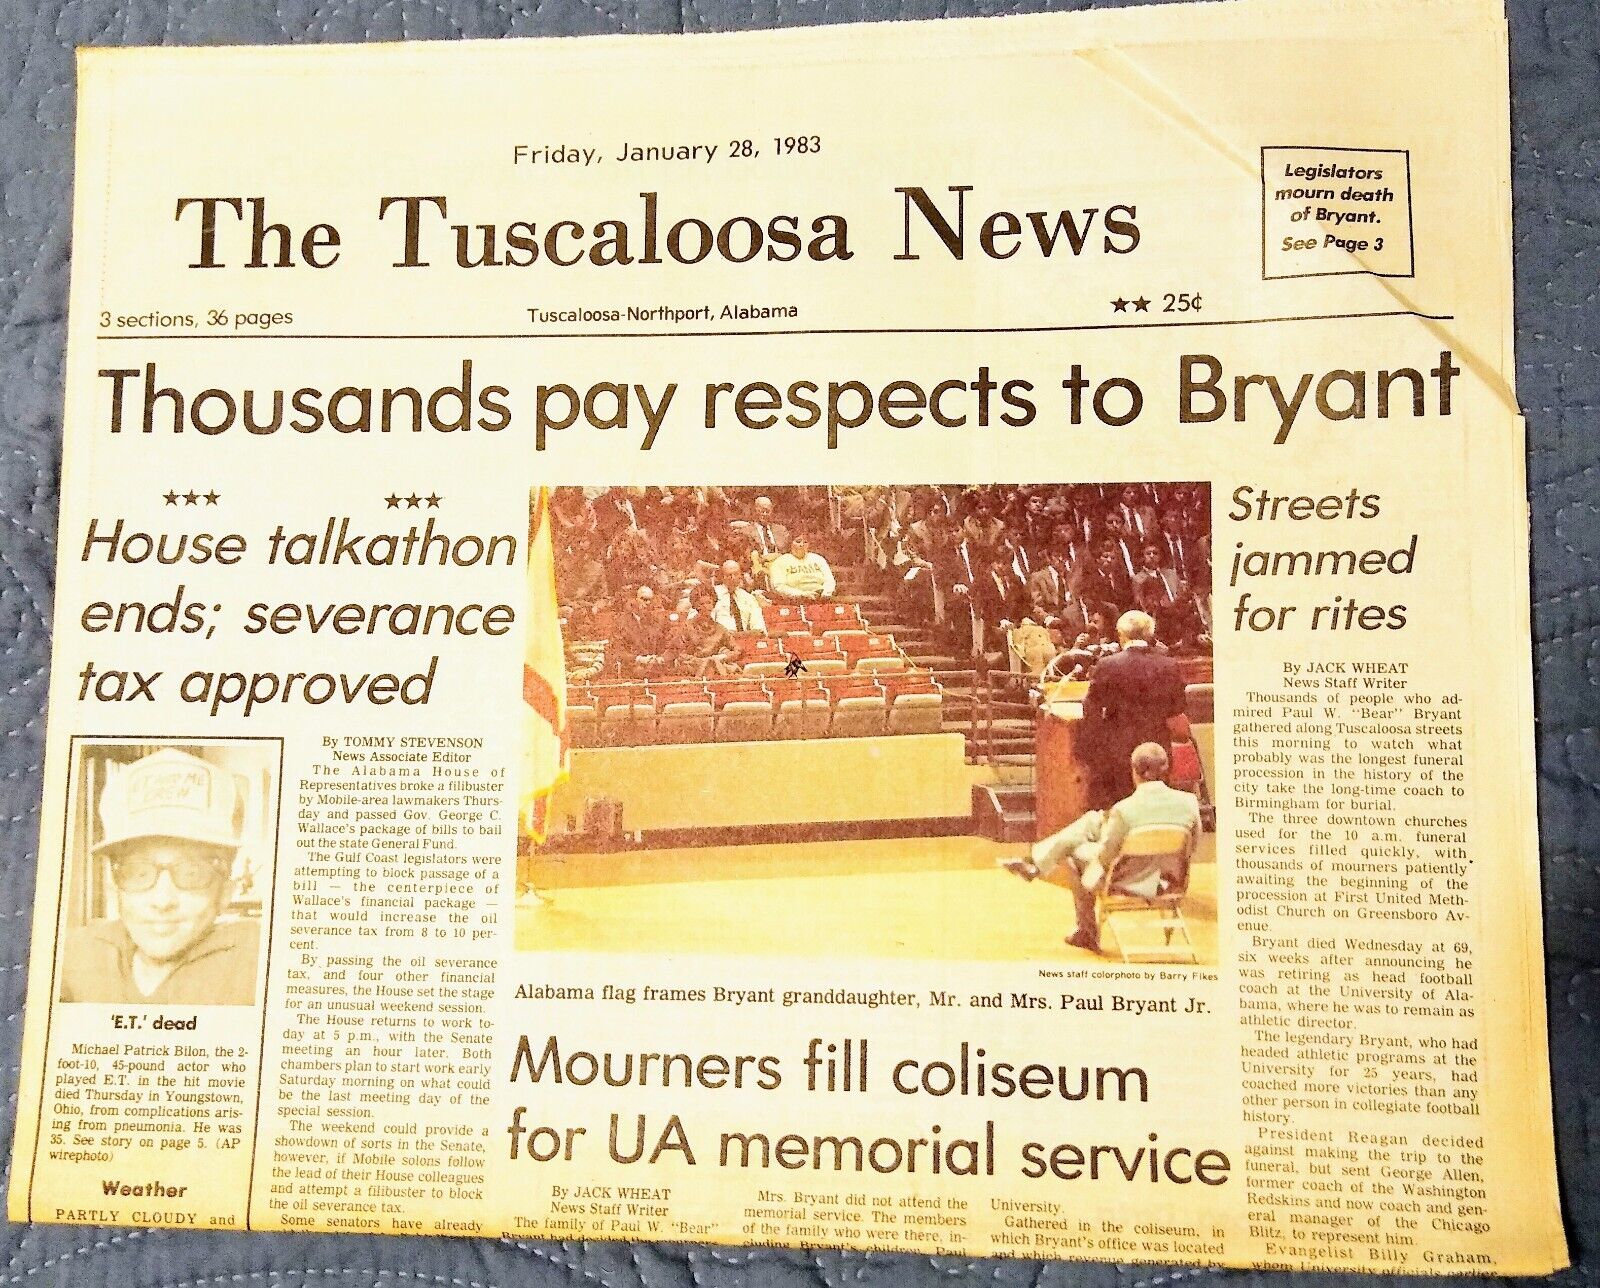 Paul Bear Bryant Funeral The Tuscaloosa News January 28, 1983 Original Newspaper